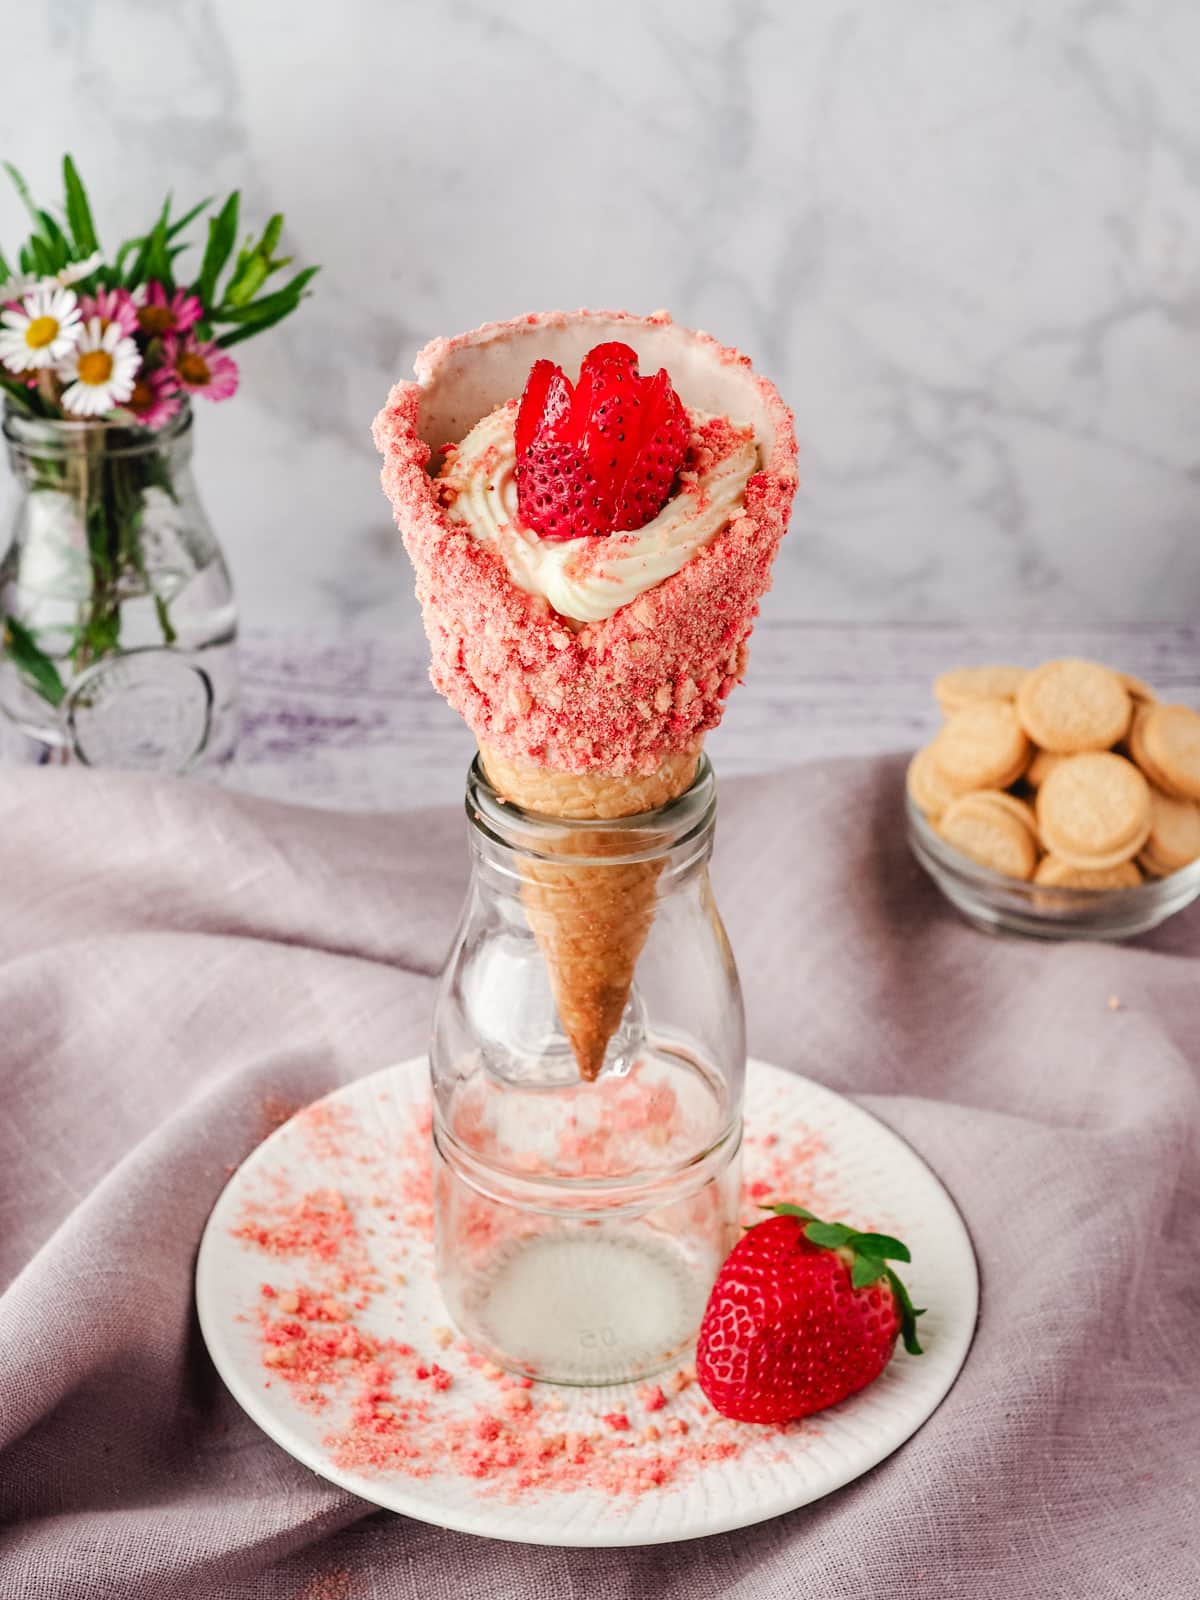 Serving strawberry crunch dessert cone rested upright in a glass jar.